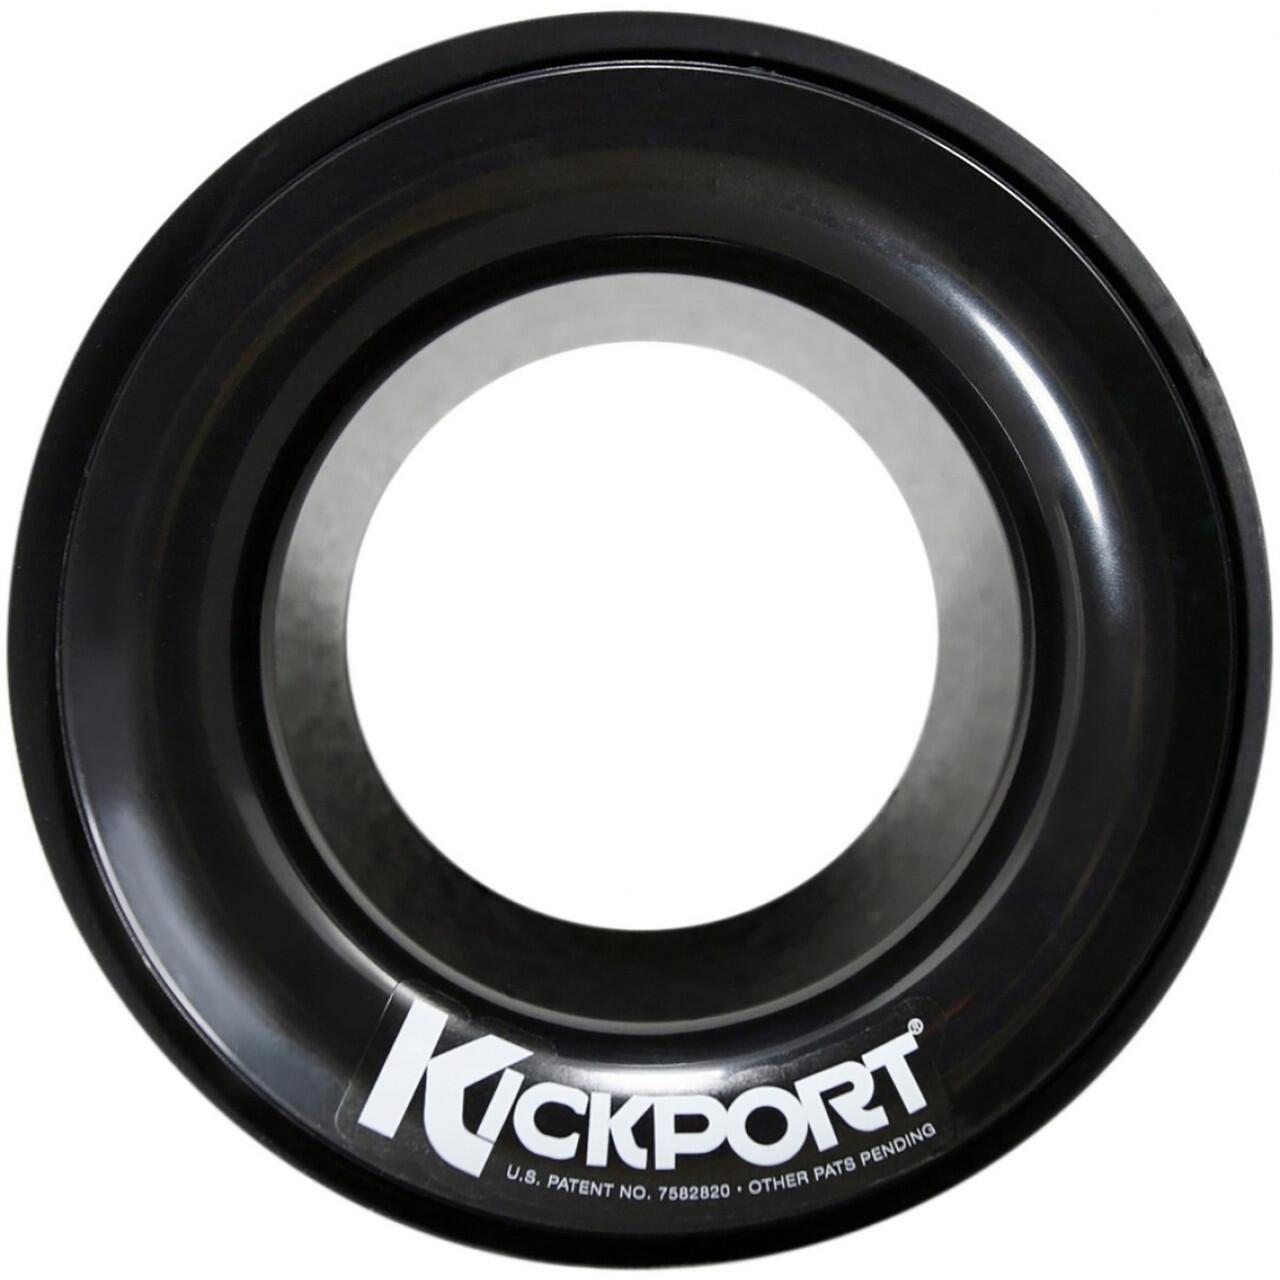 KickPort Kick Port Black : photo 1